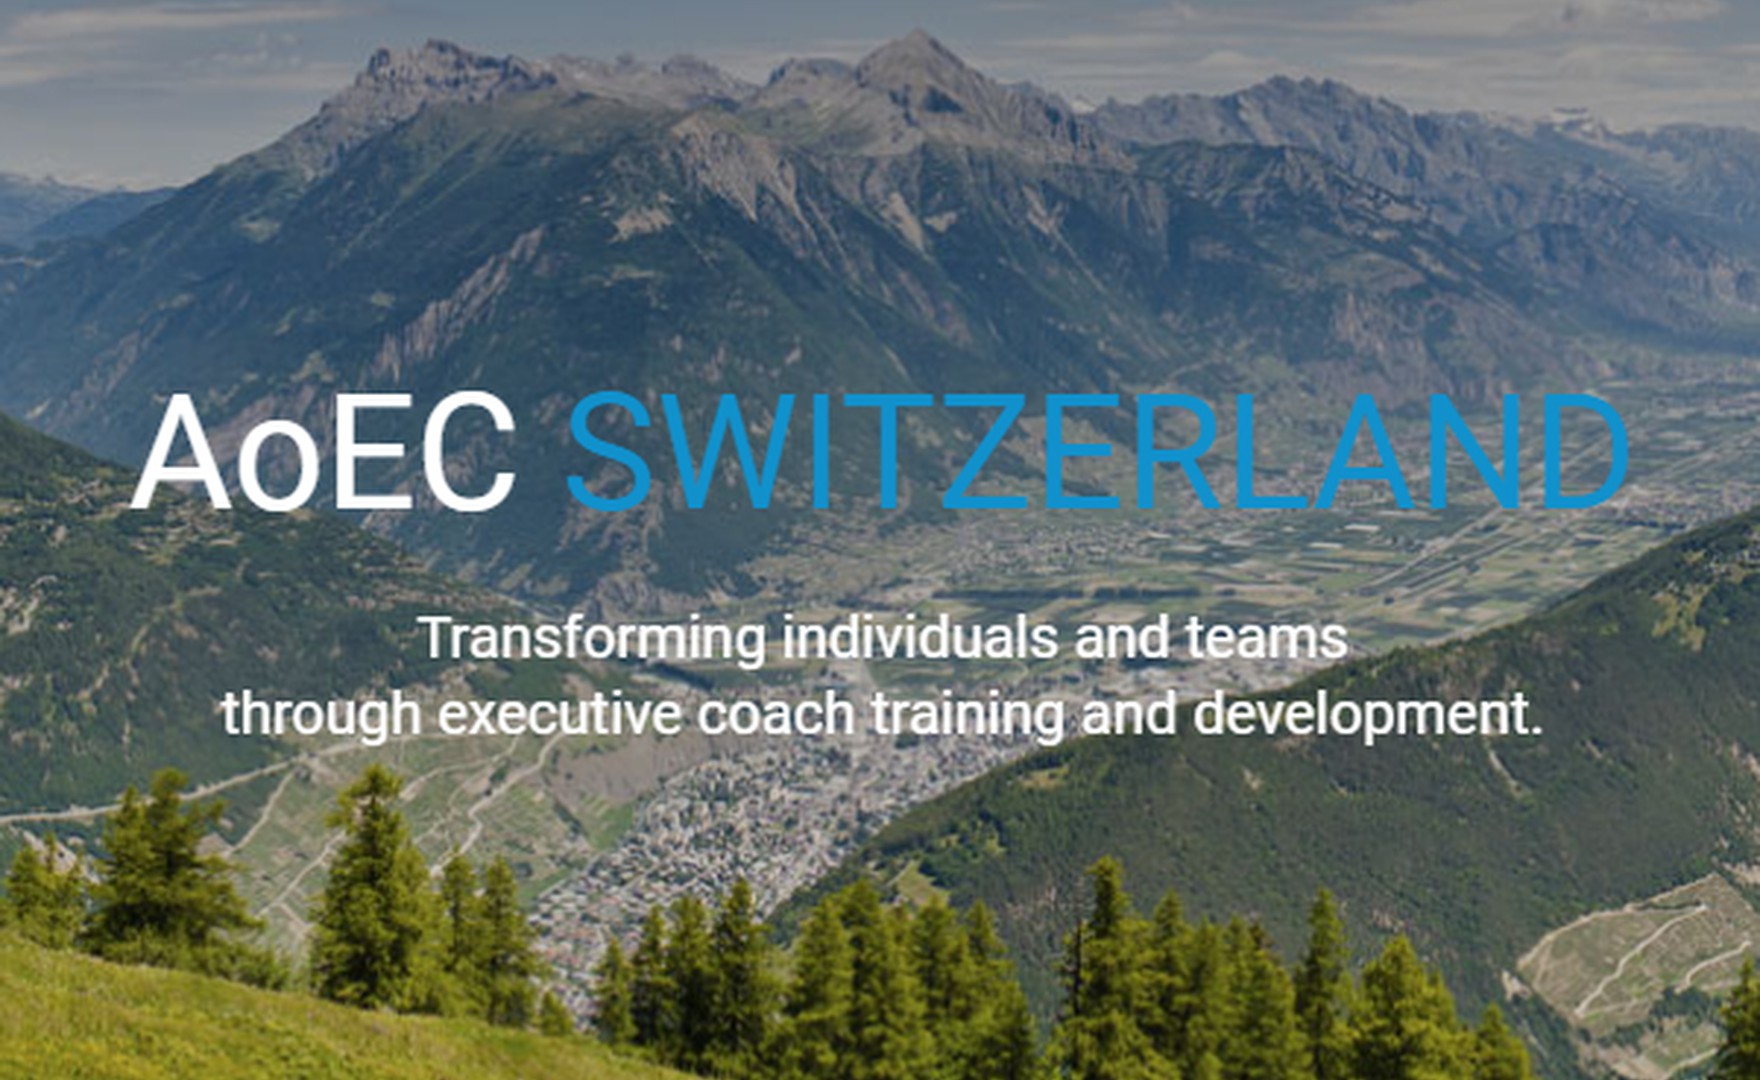 AoEC announces a new presence in Switzerland